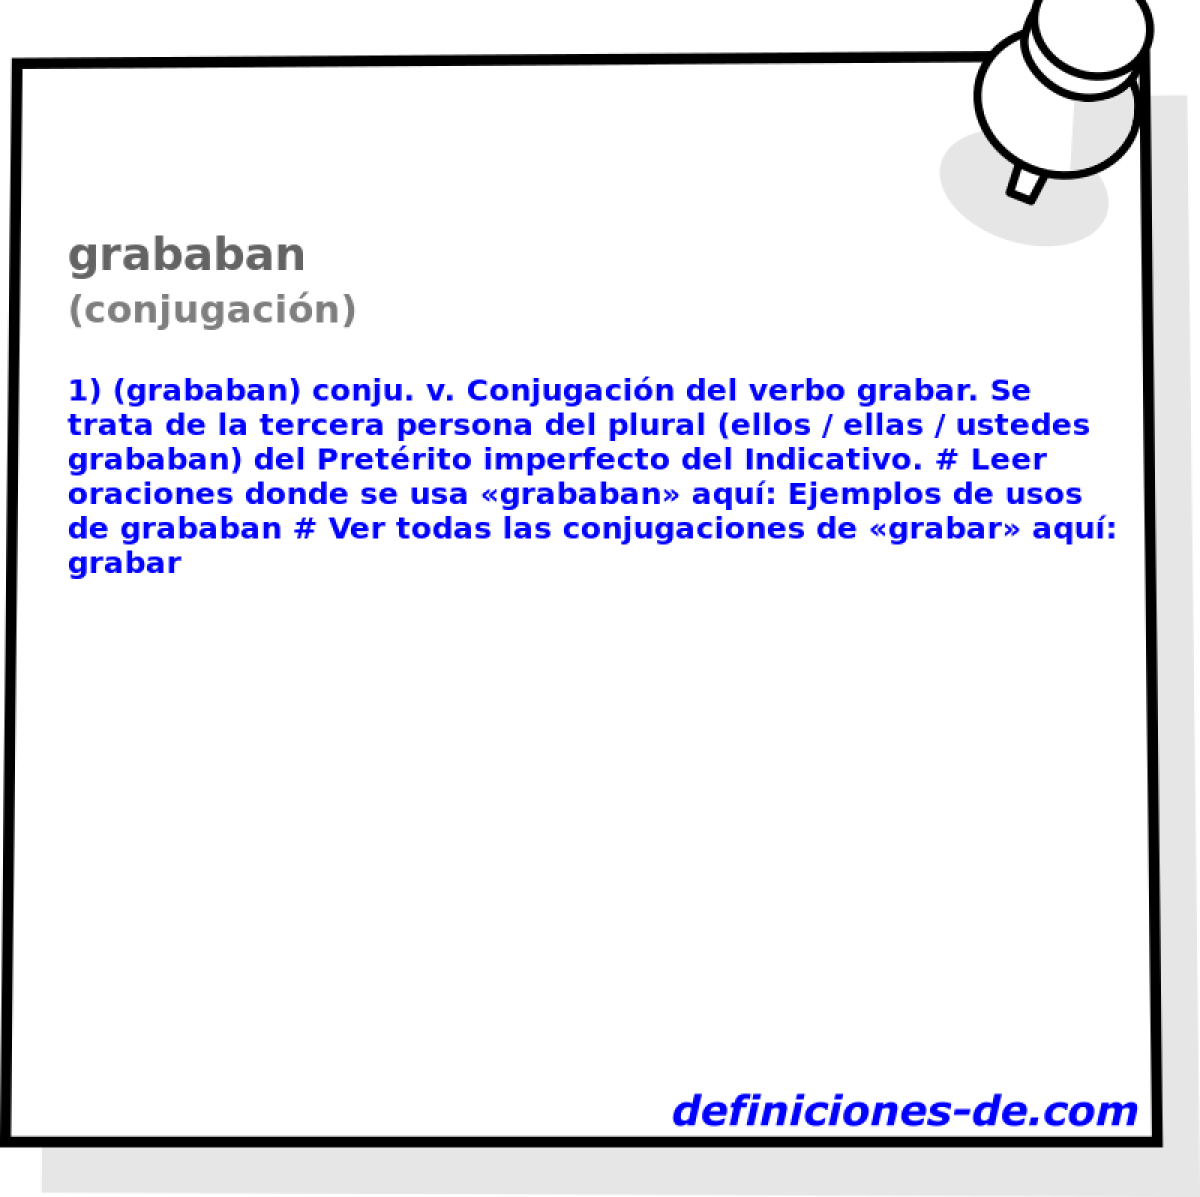 grababan (conjugacin)